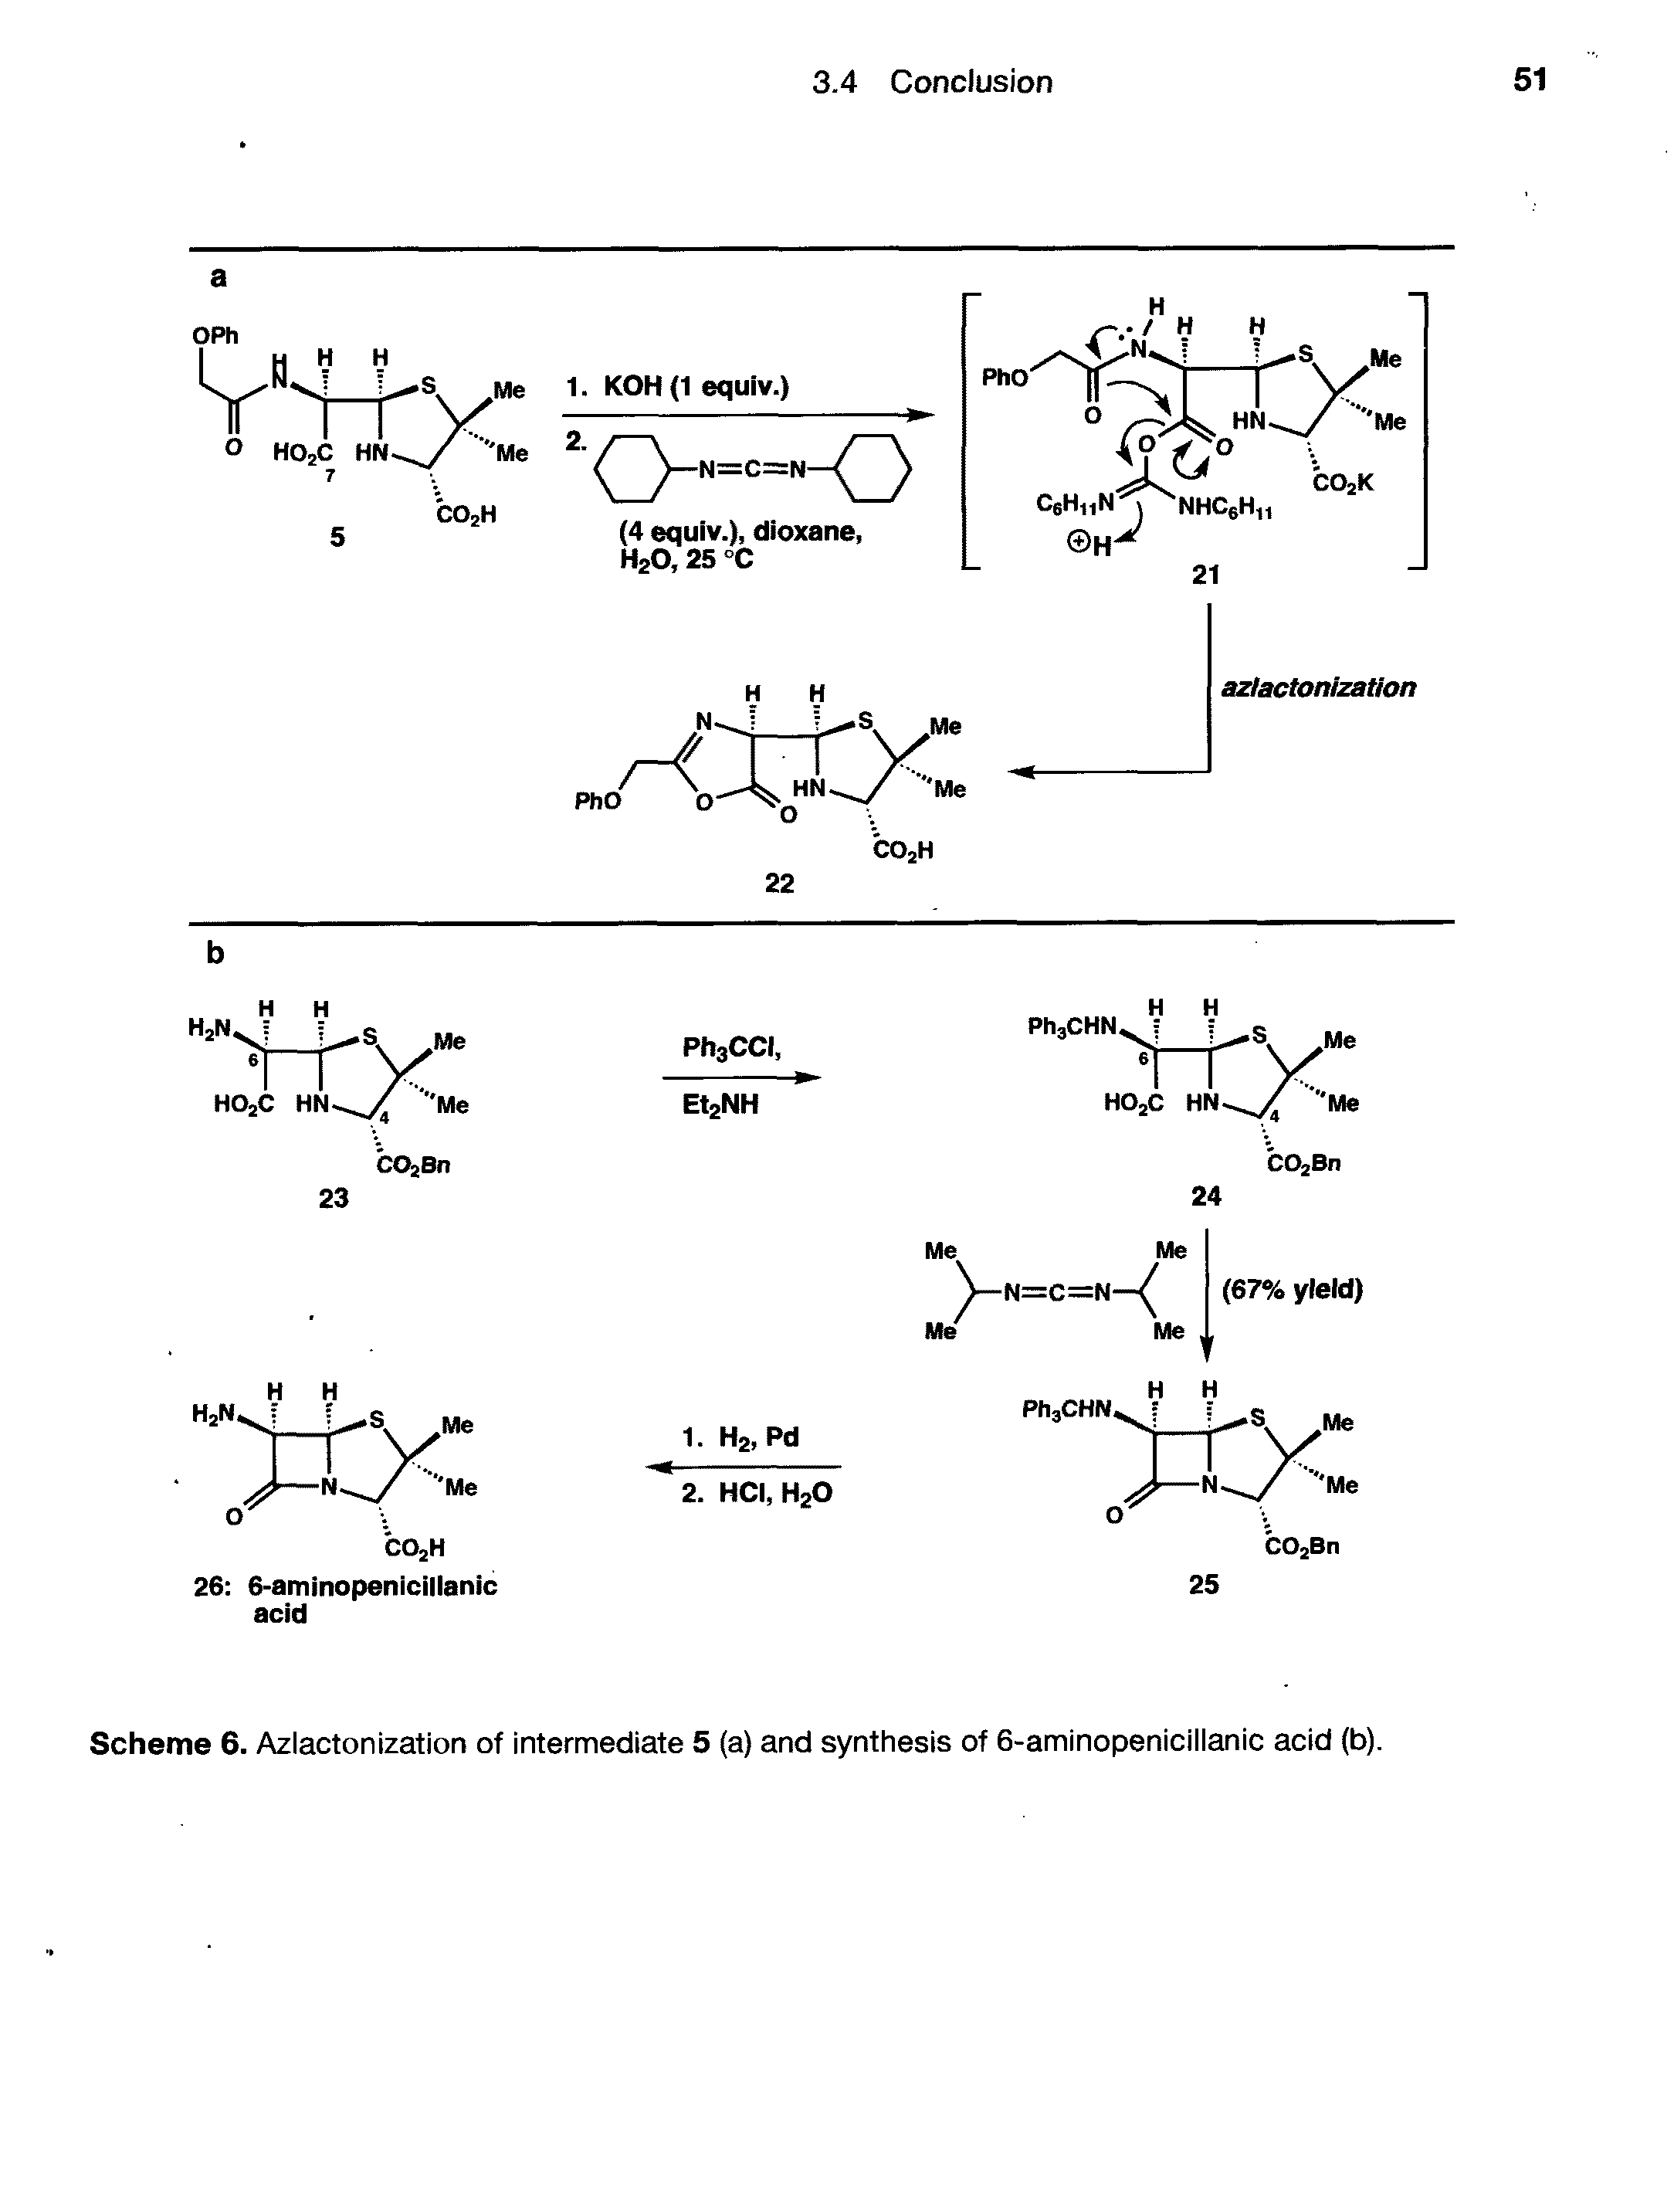 Scheme 6. Azlactonization of intermediate 5 (a) and synthesis of 6-aminopenicillanic acid (b).